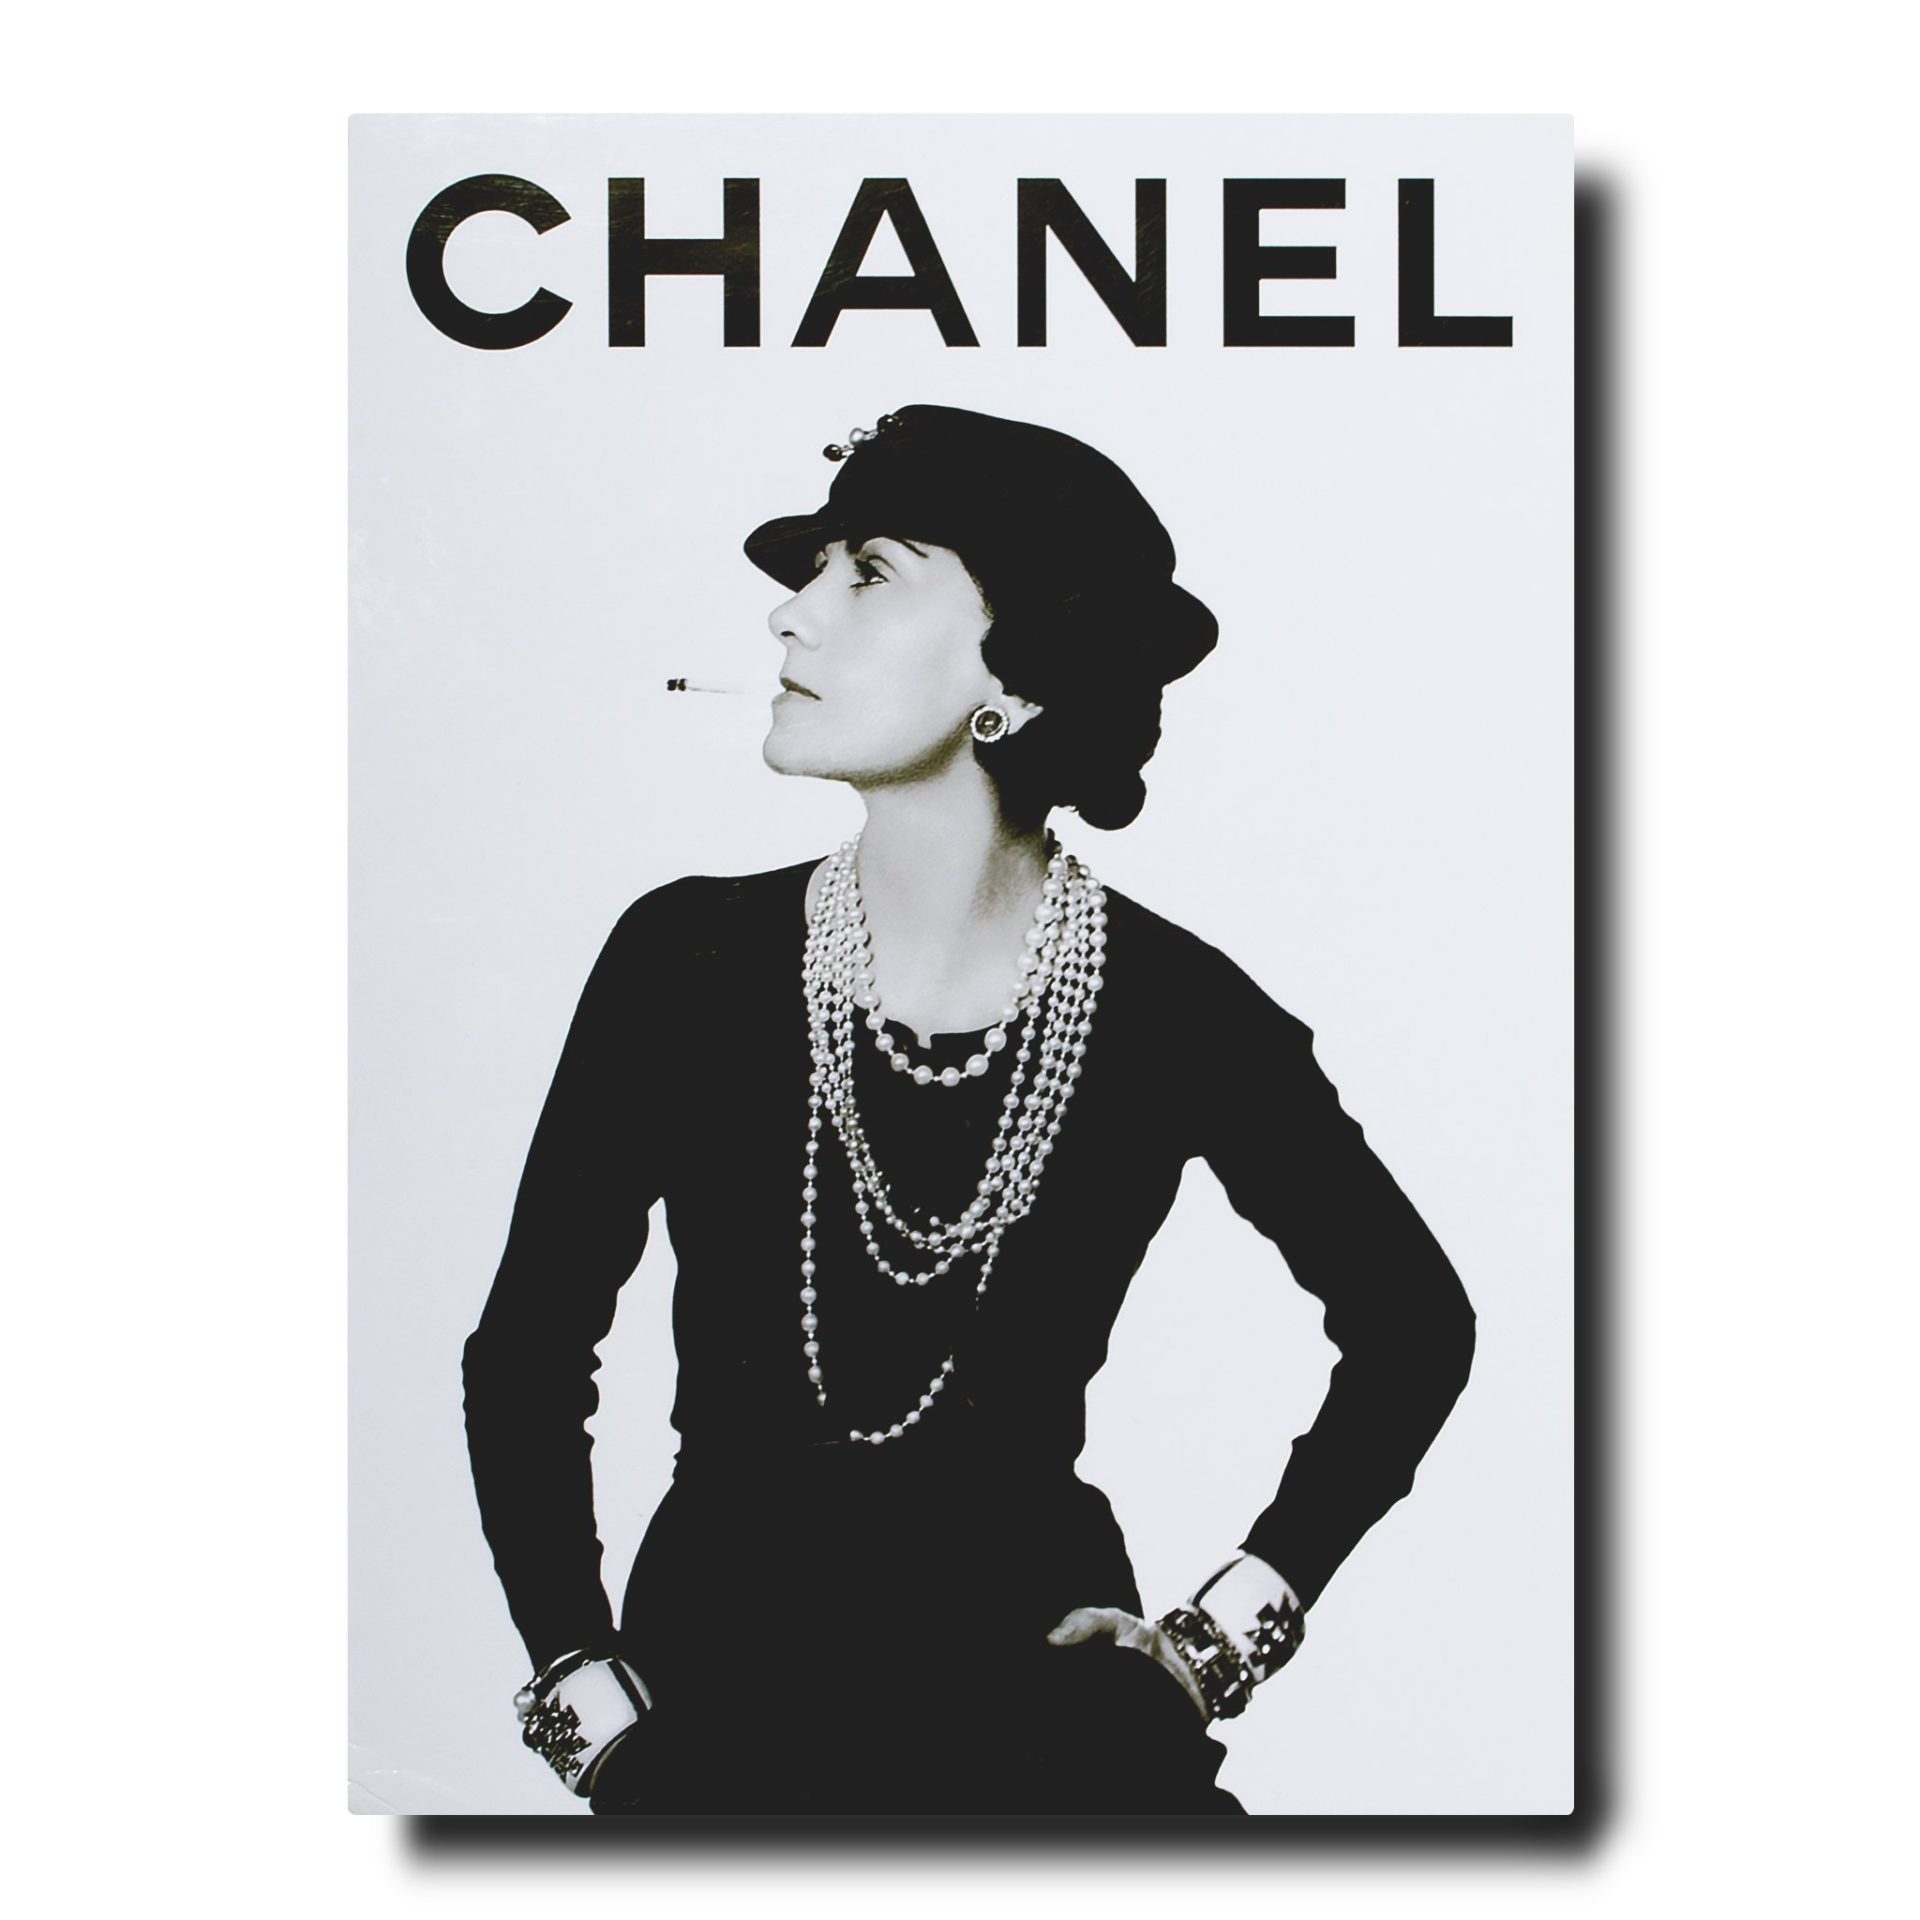 Chanel 3-BOOK Slipcase 9782843235184 » Edwards Lowell, Malta